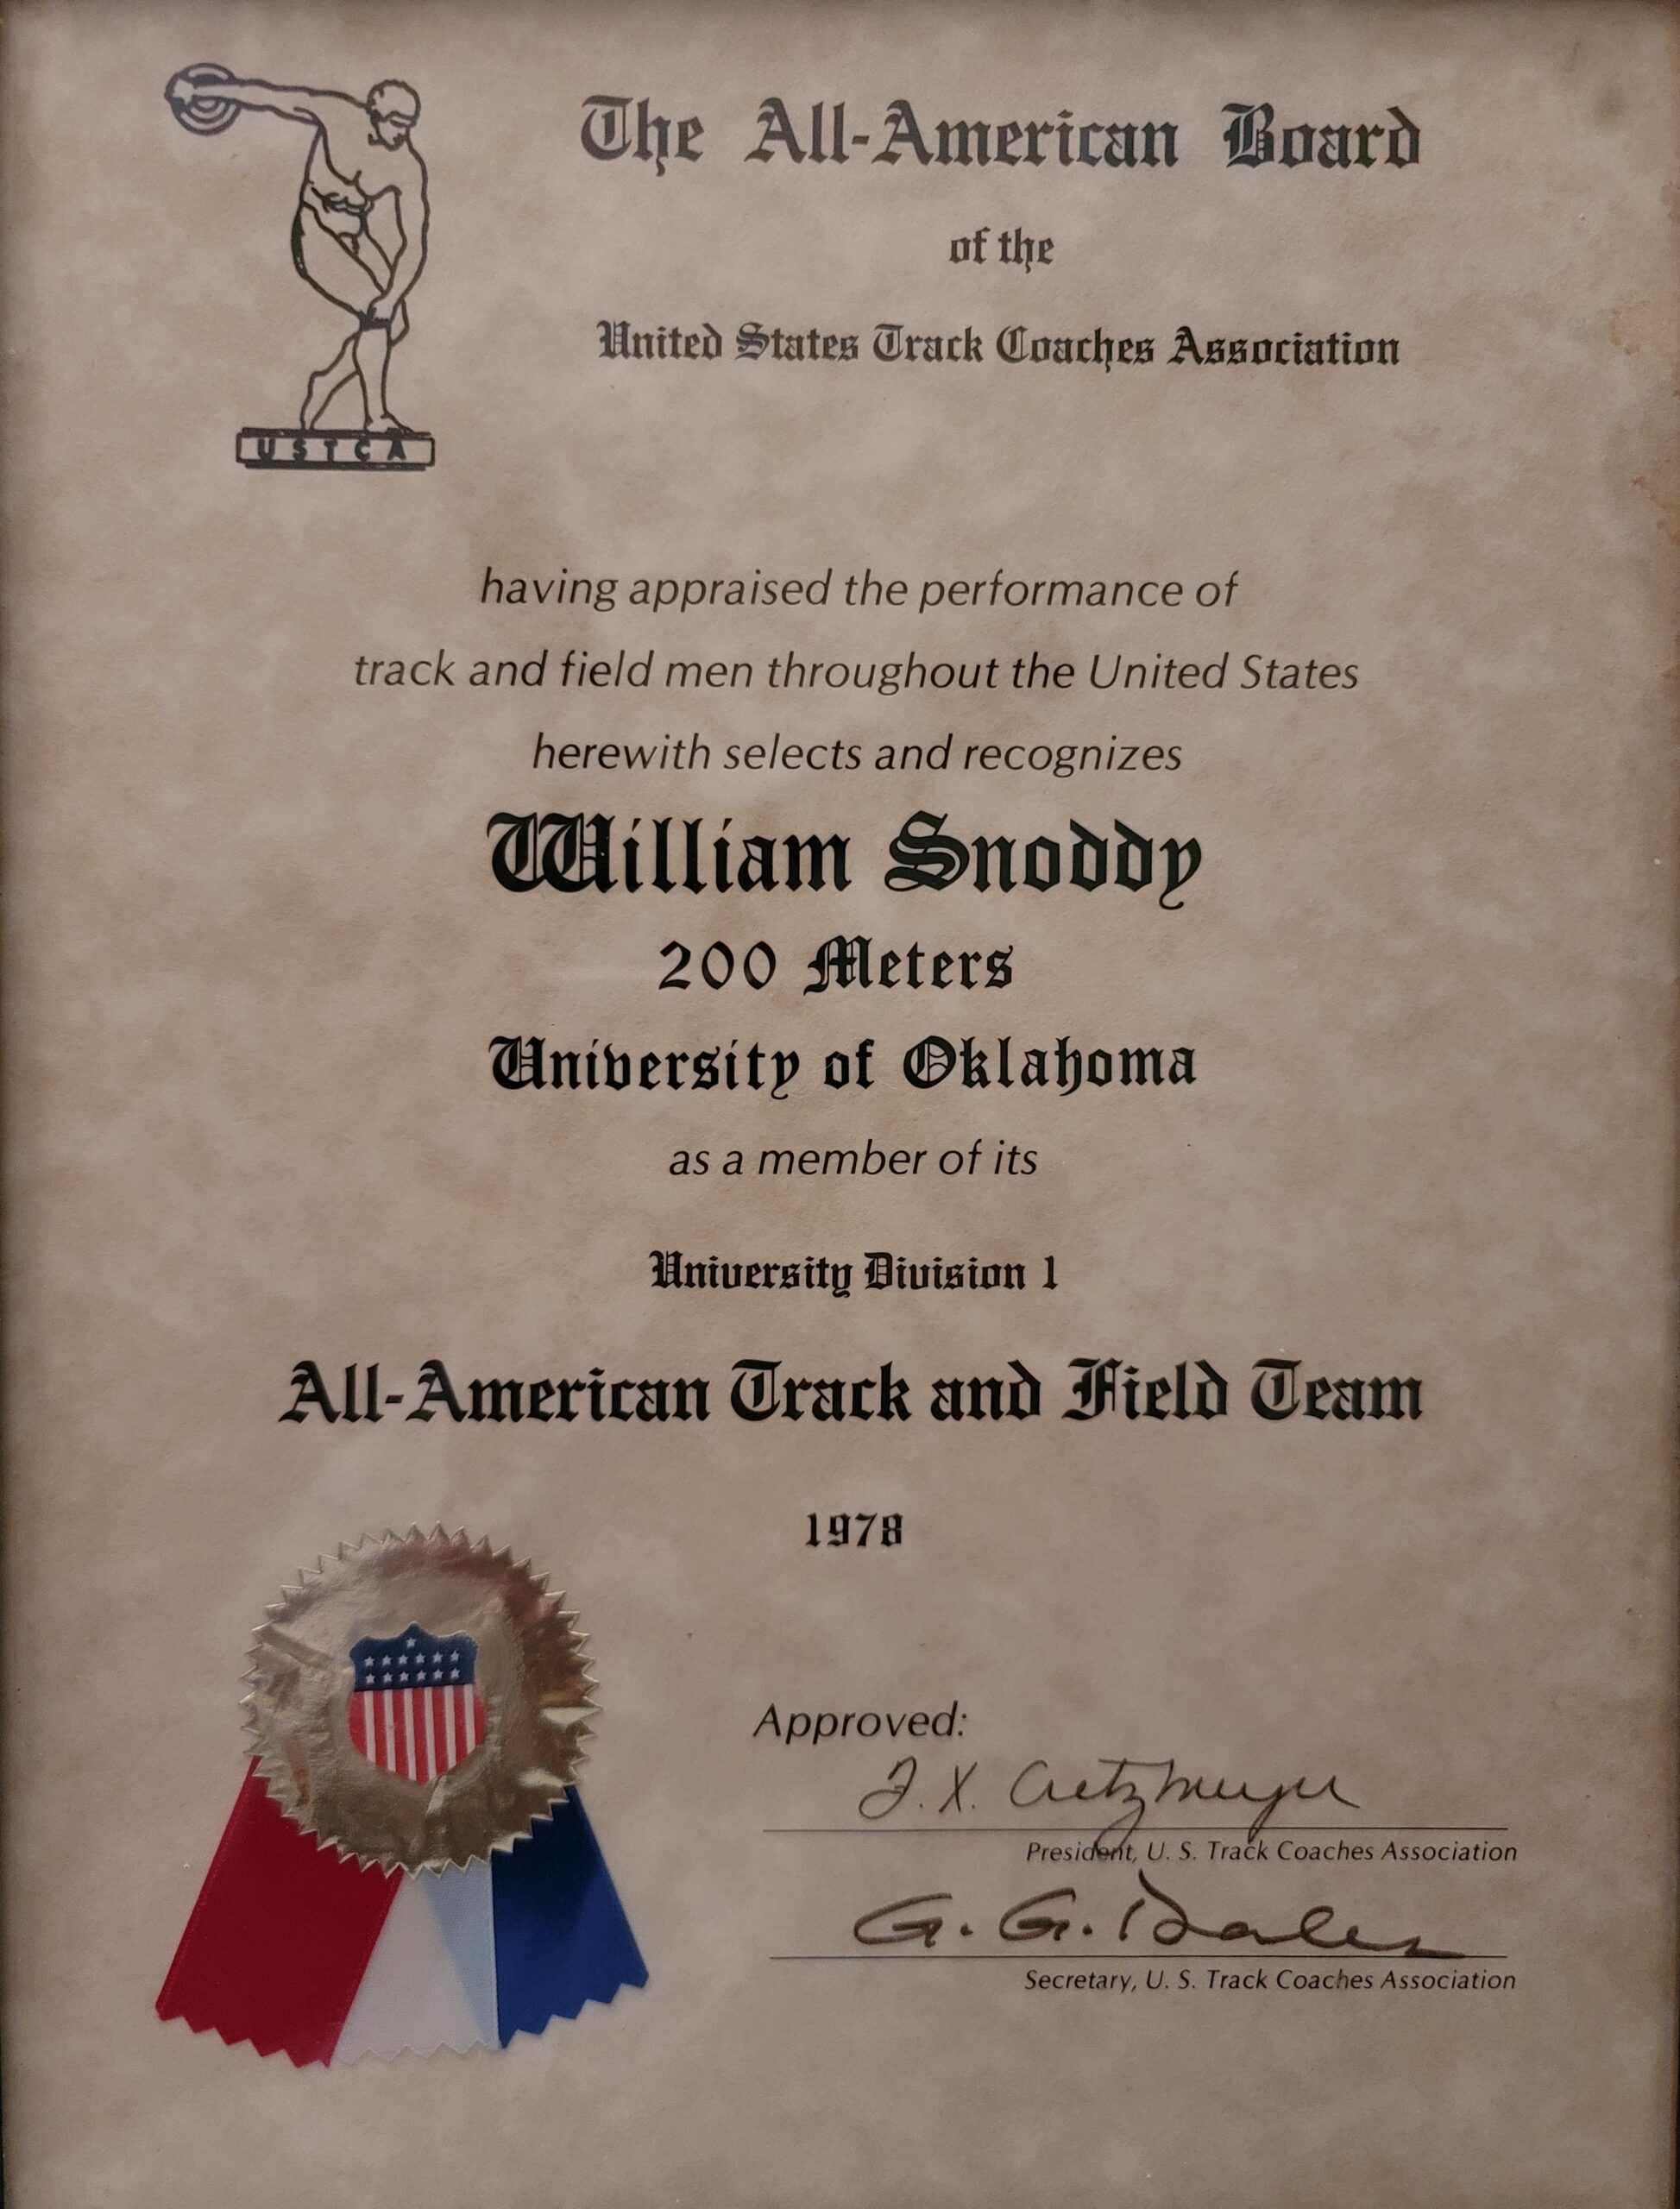 William Snoddy 1978 200 Metres award